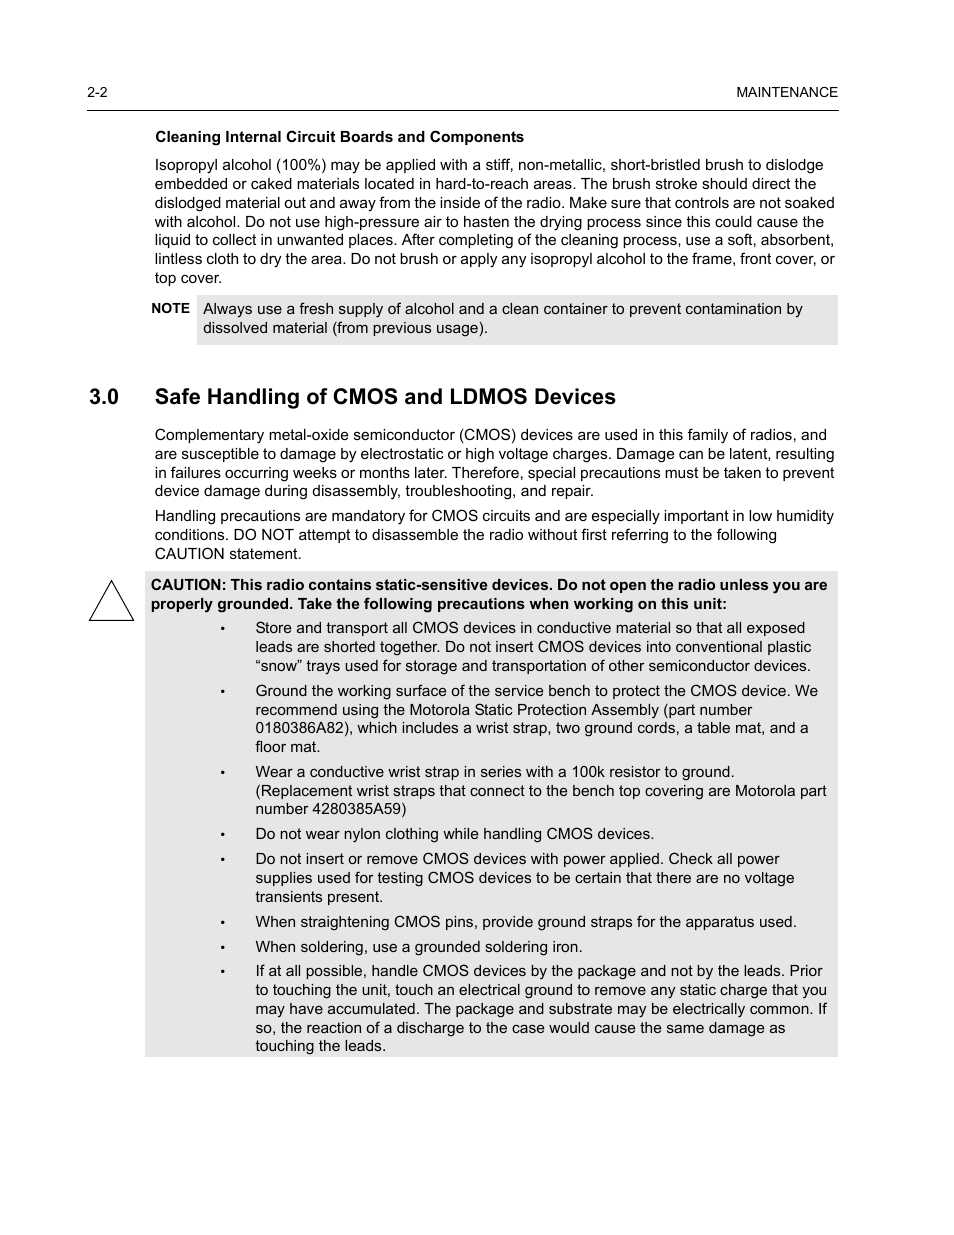 0 safe handling of cmos and ldmos devices | Nikon RADIUS CM200 User Manual | Page 16 / 70